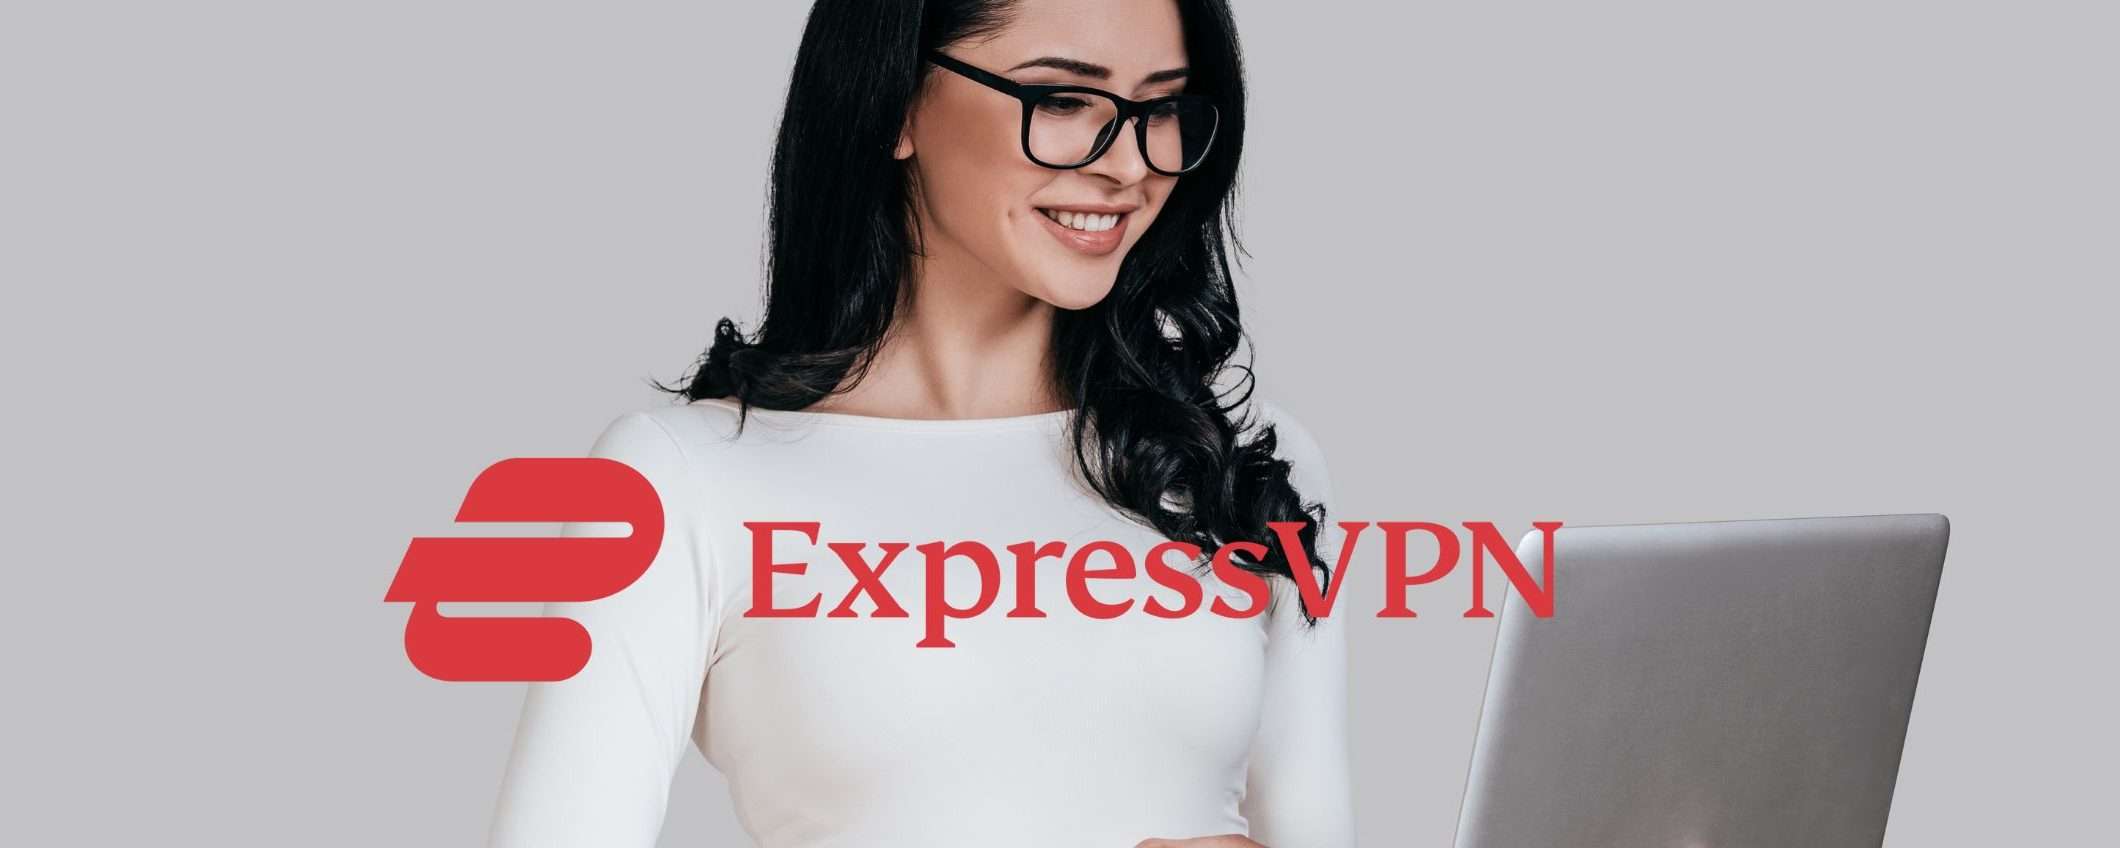 Sfrutta l'offerta ExpressVPN: 3 mesi gratis